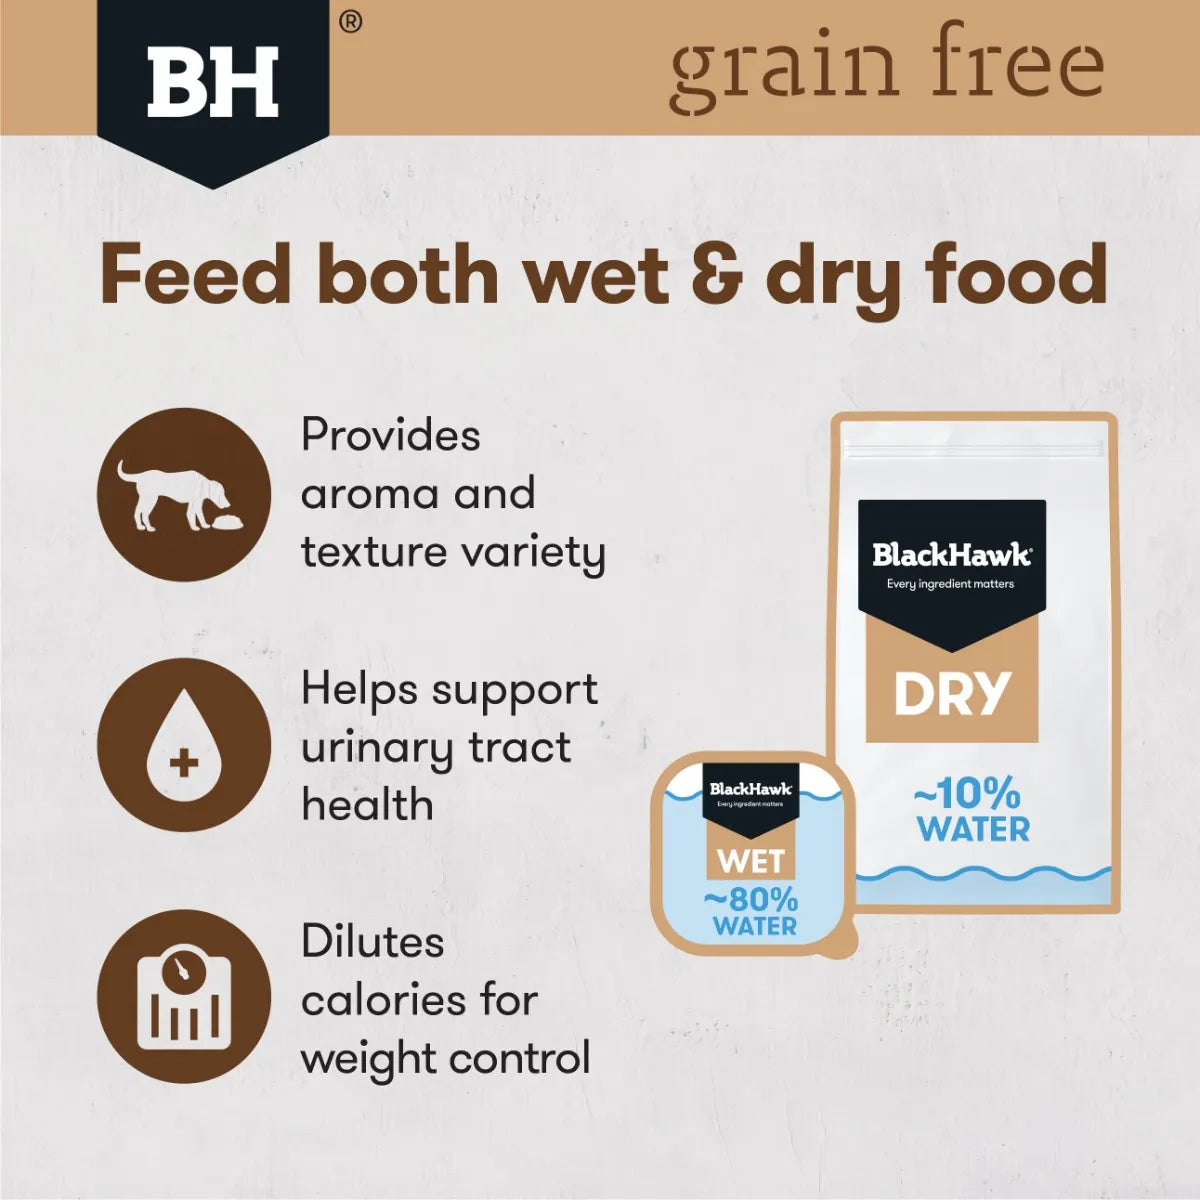 BlackHawk: Dog Grain Free Beef Can 100g